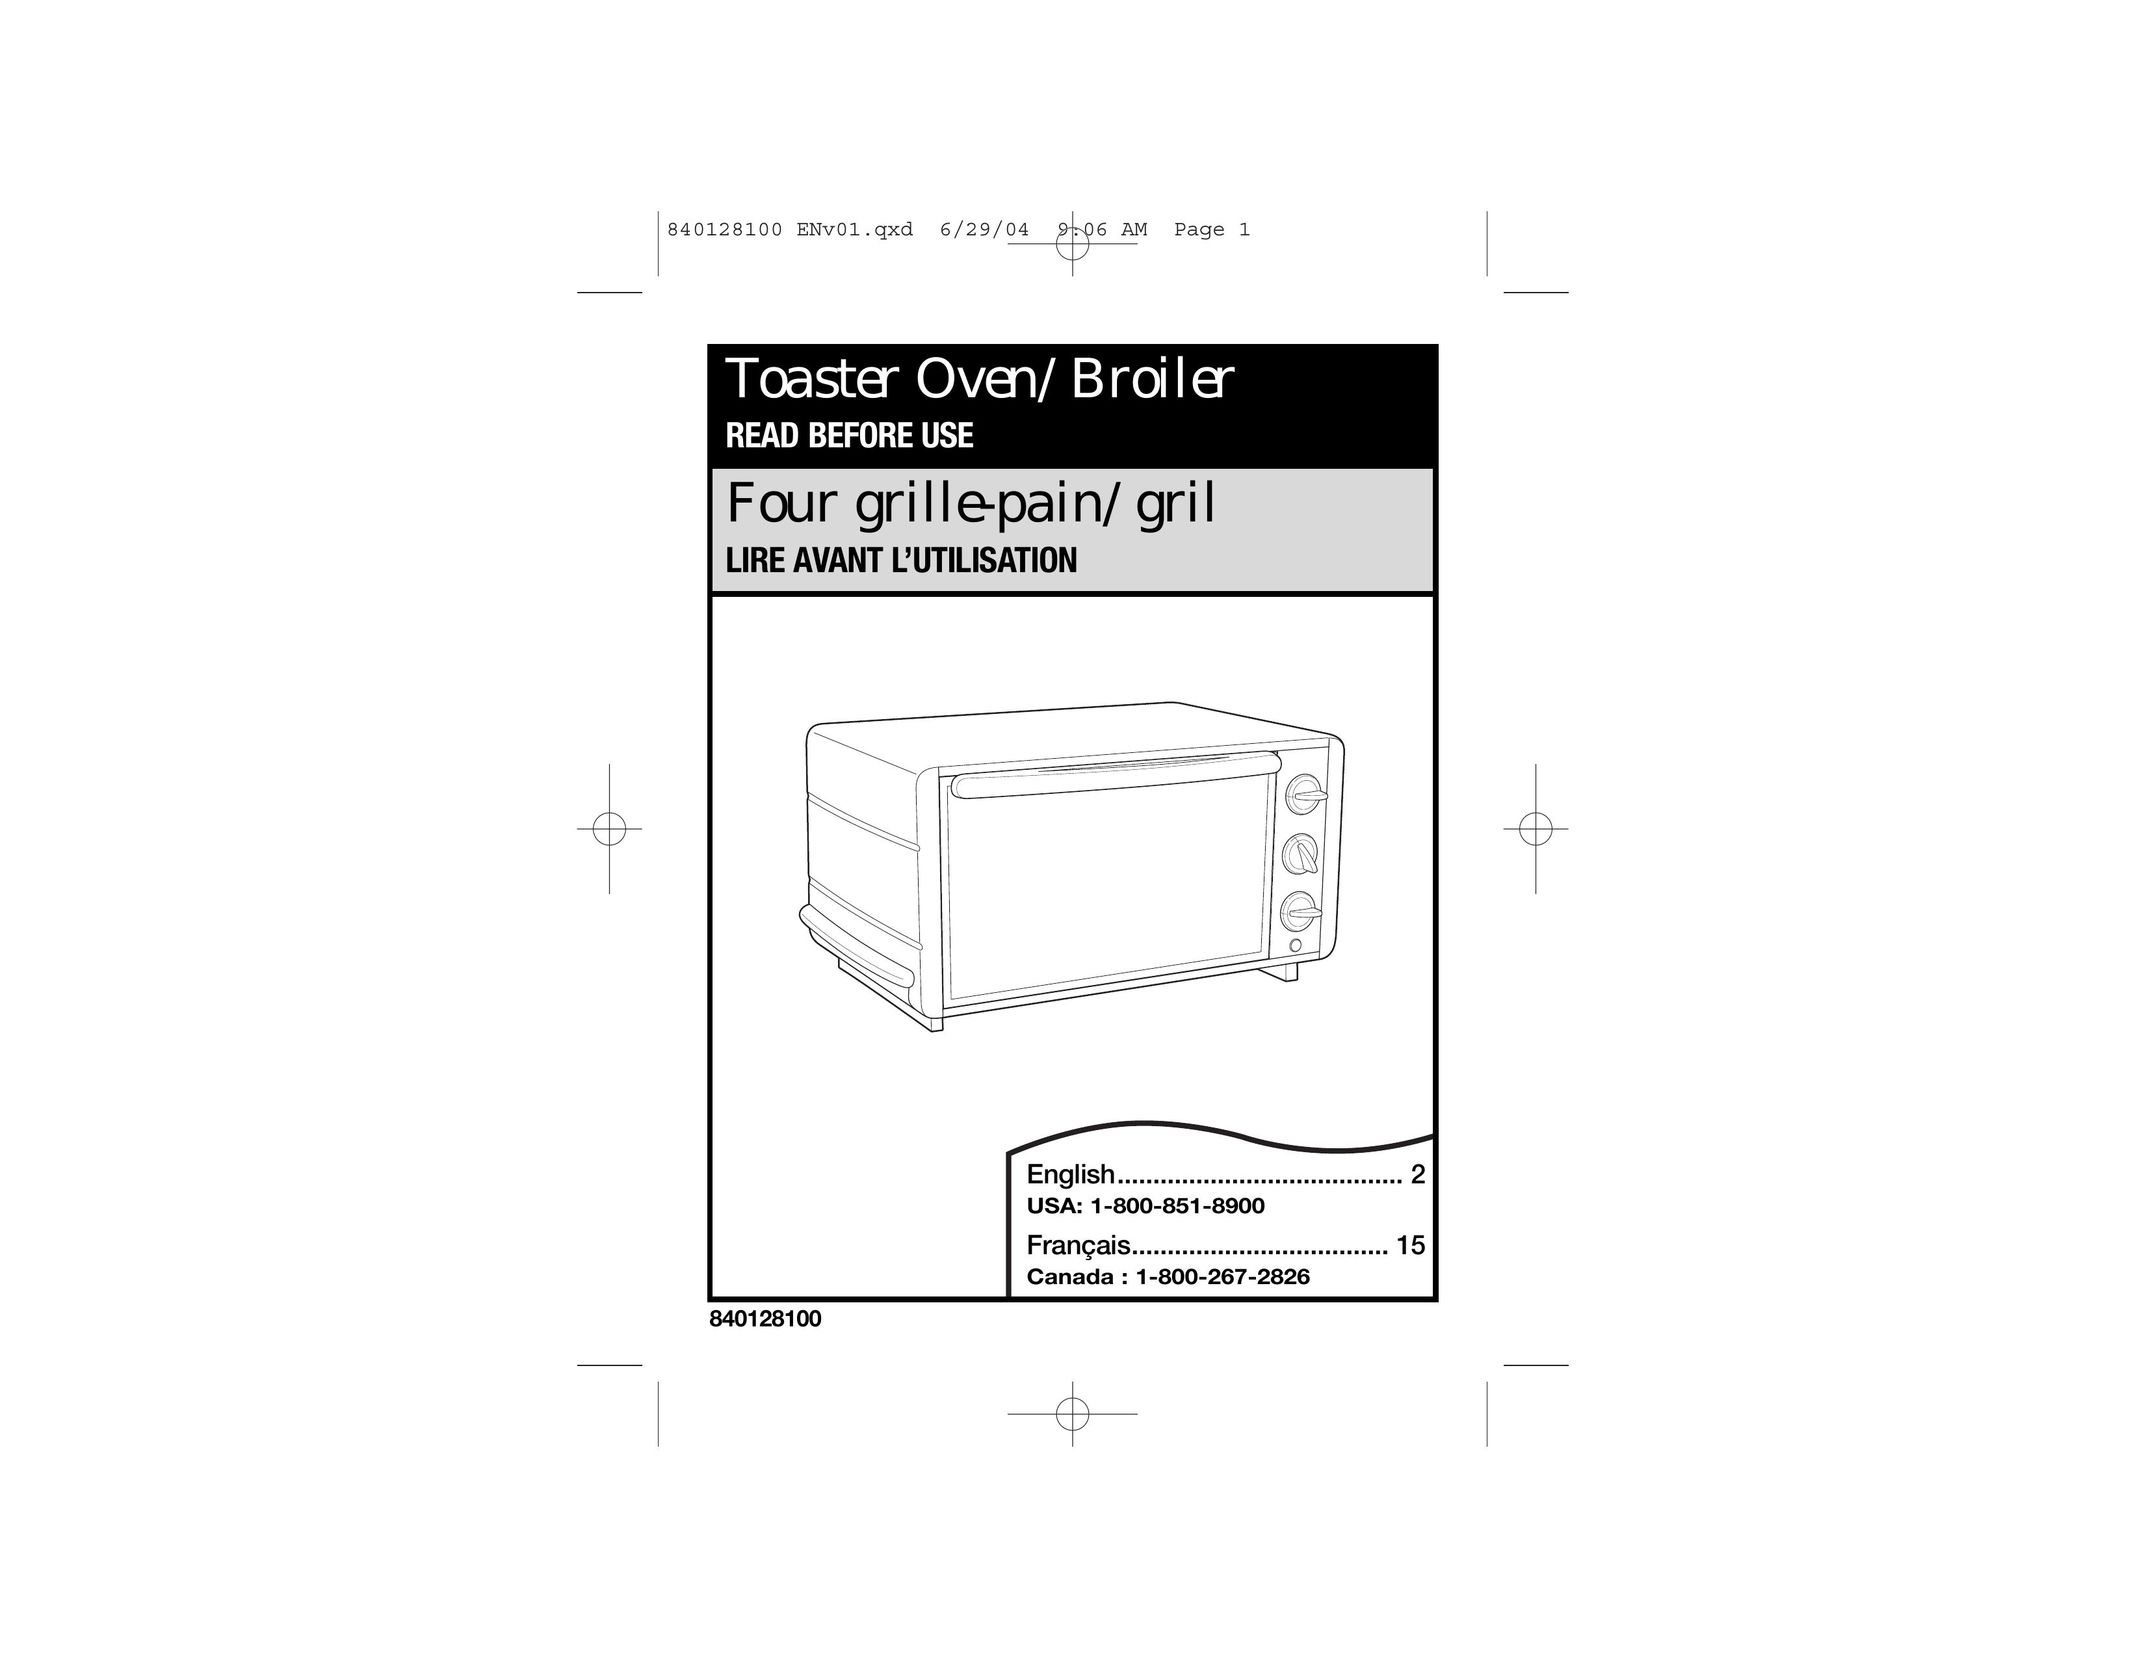 Hamilton Beach Toaster Oven Oven User Manual